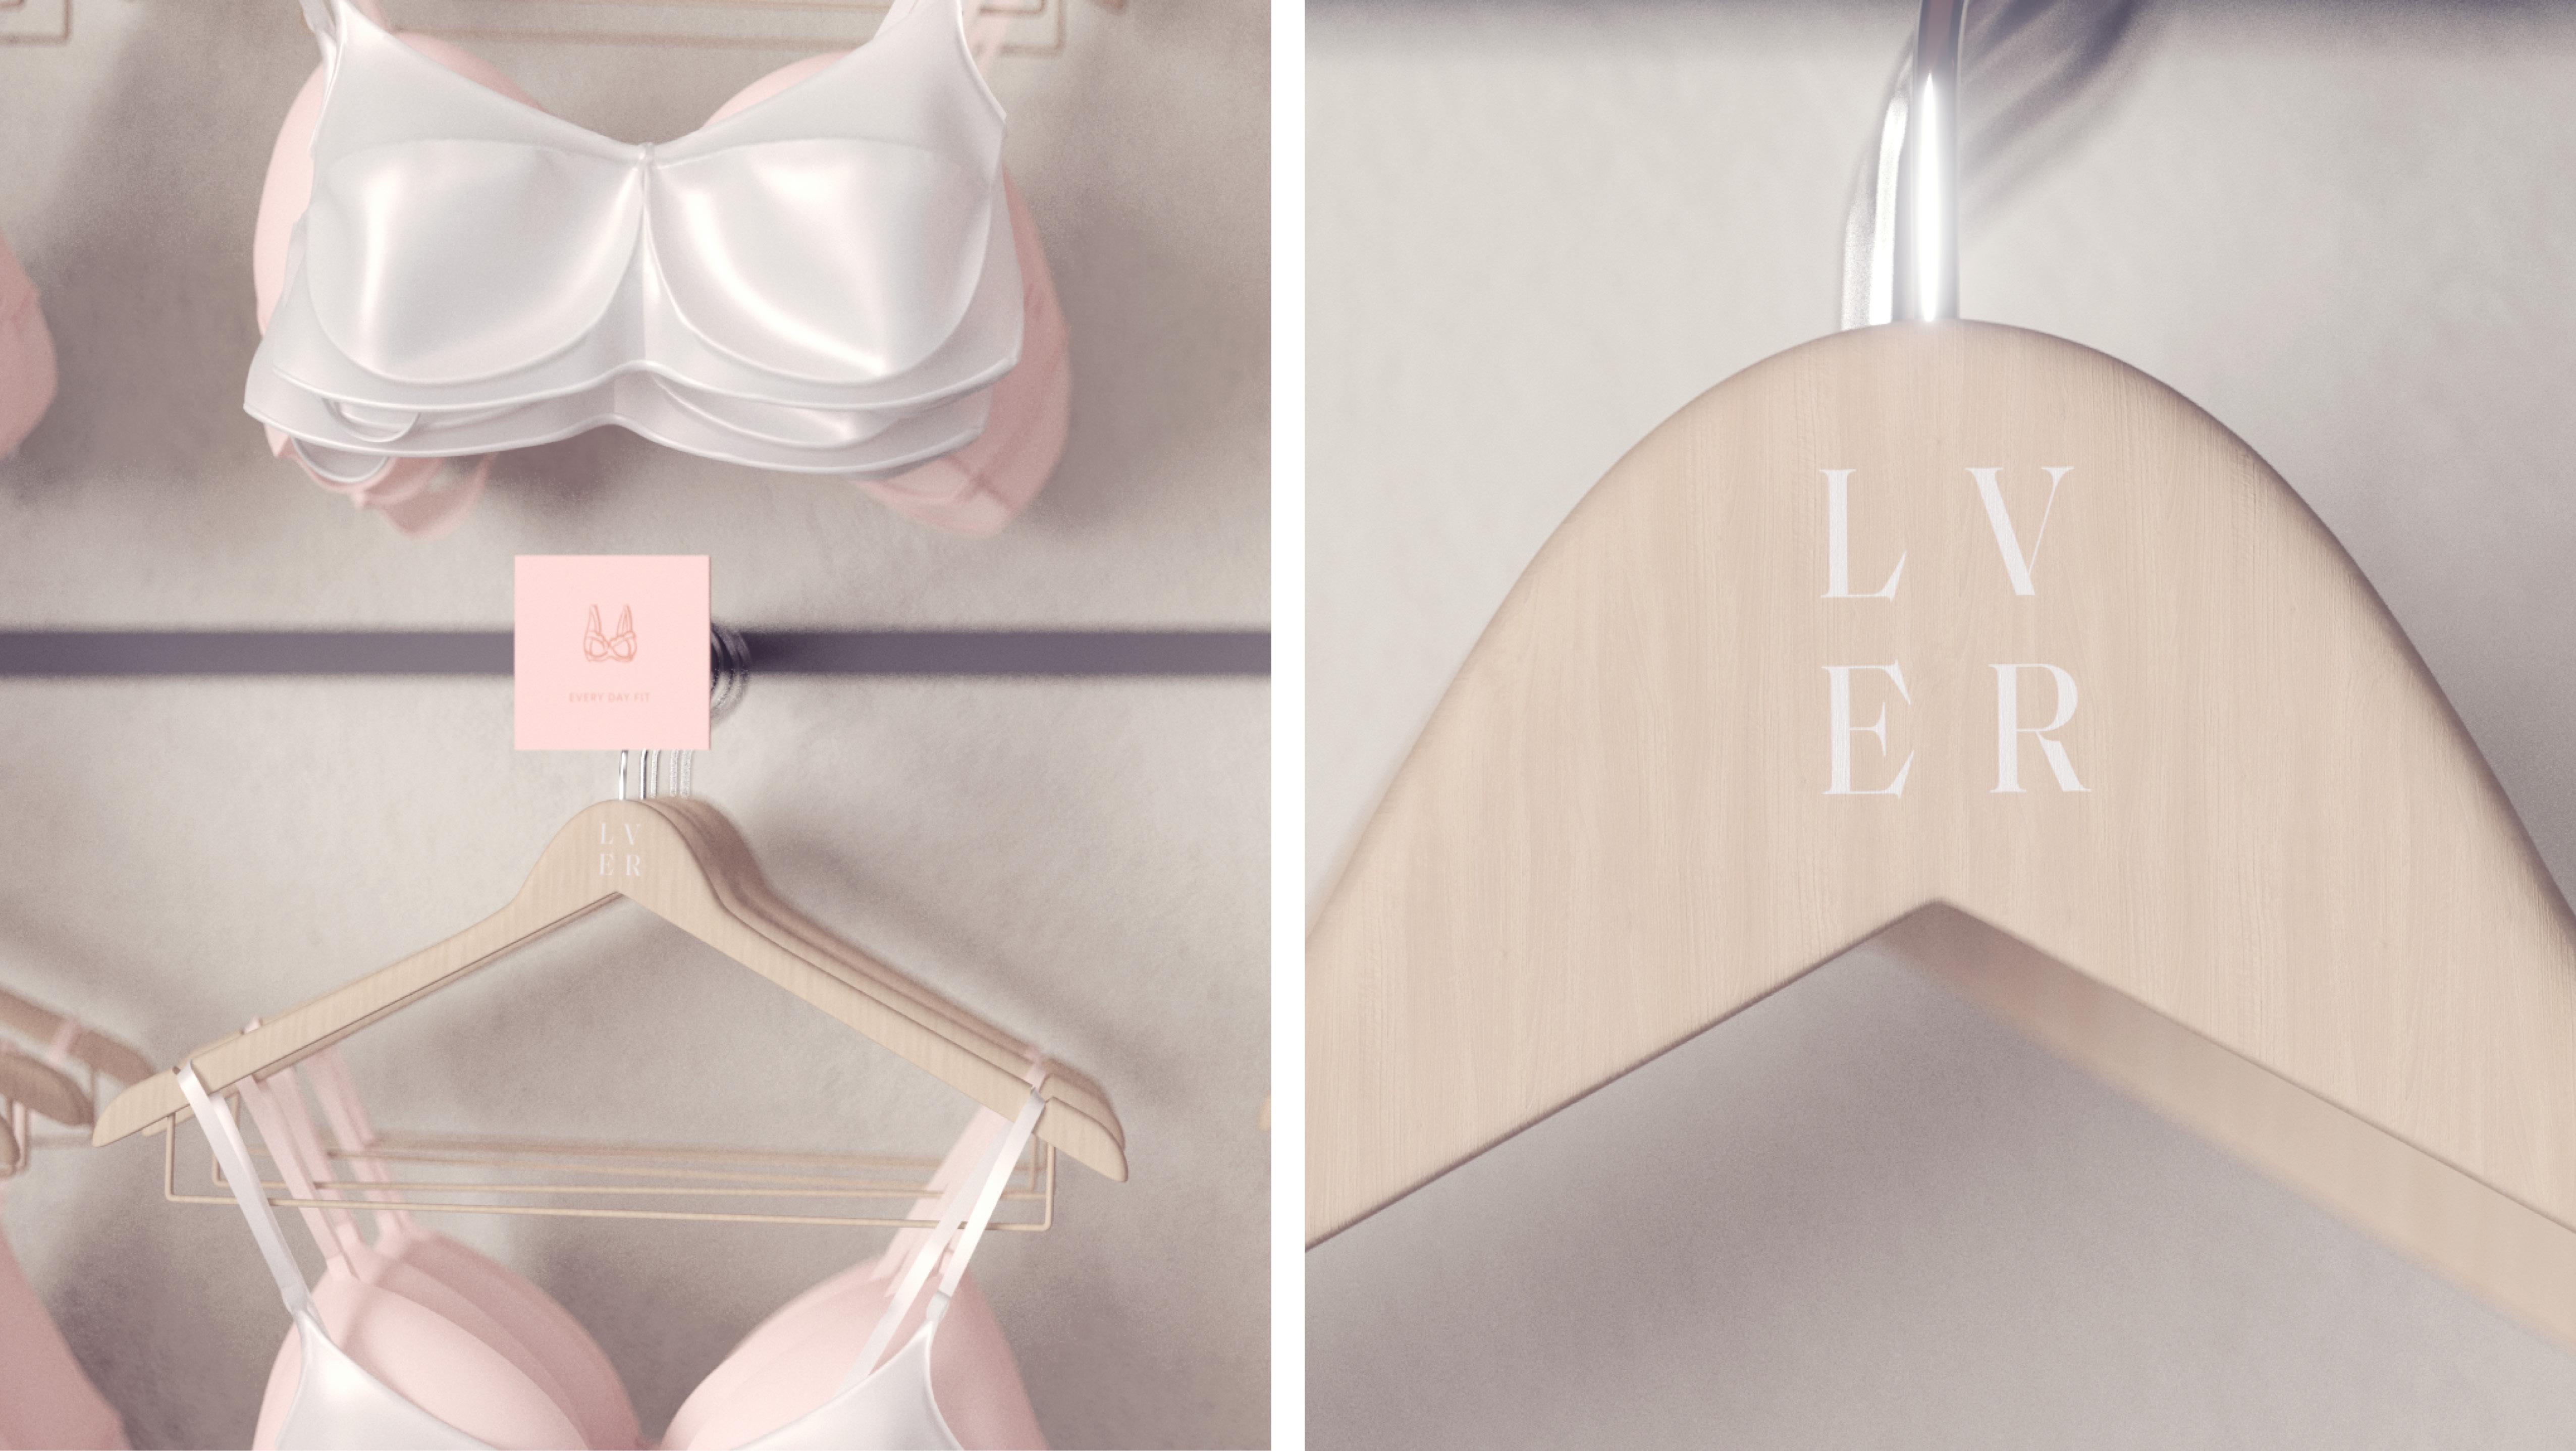 French la Vie - The Undergarment Shop Reveals the Truth